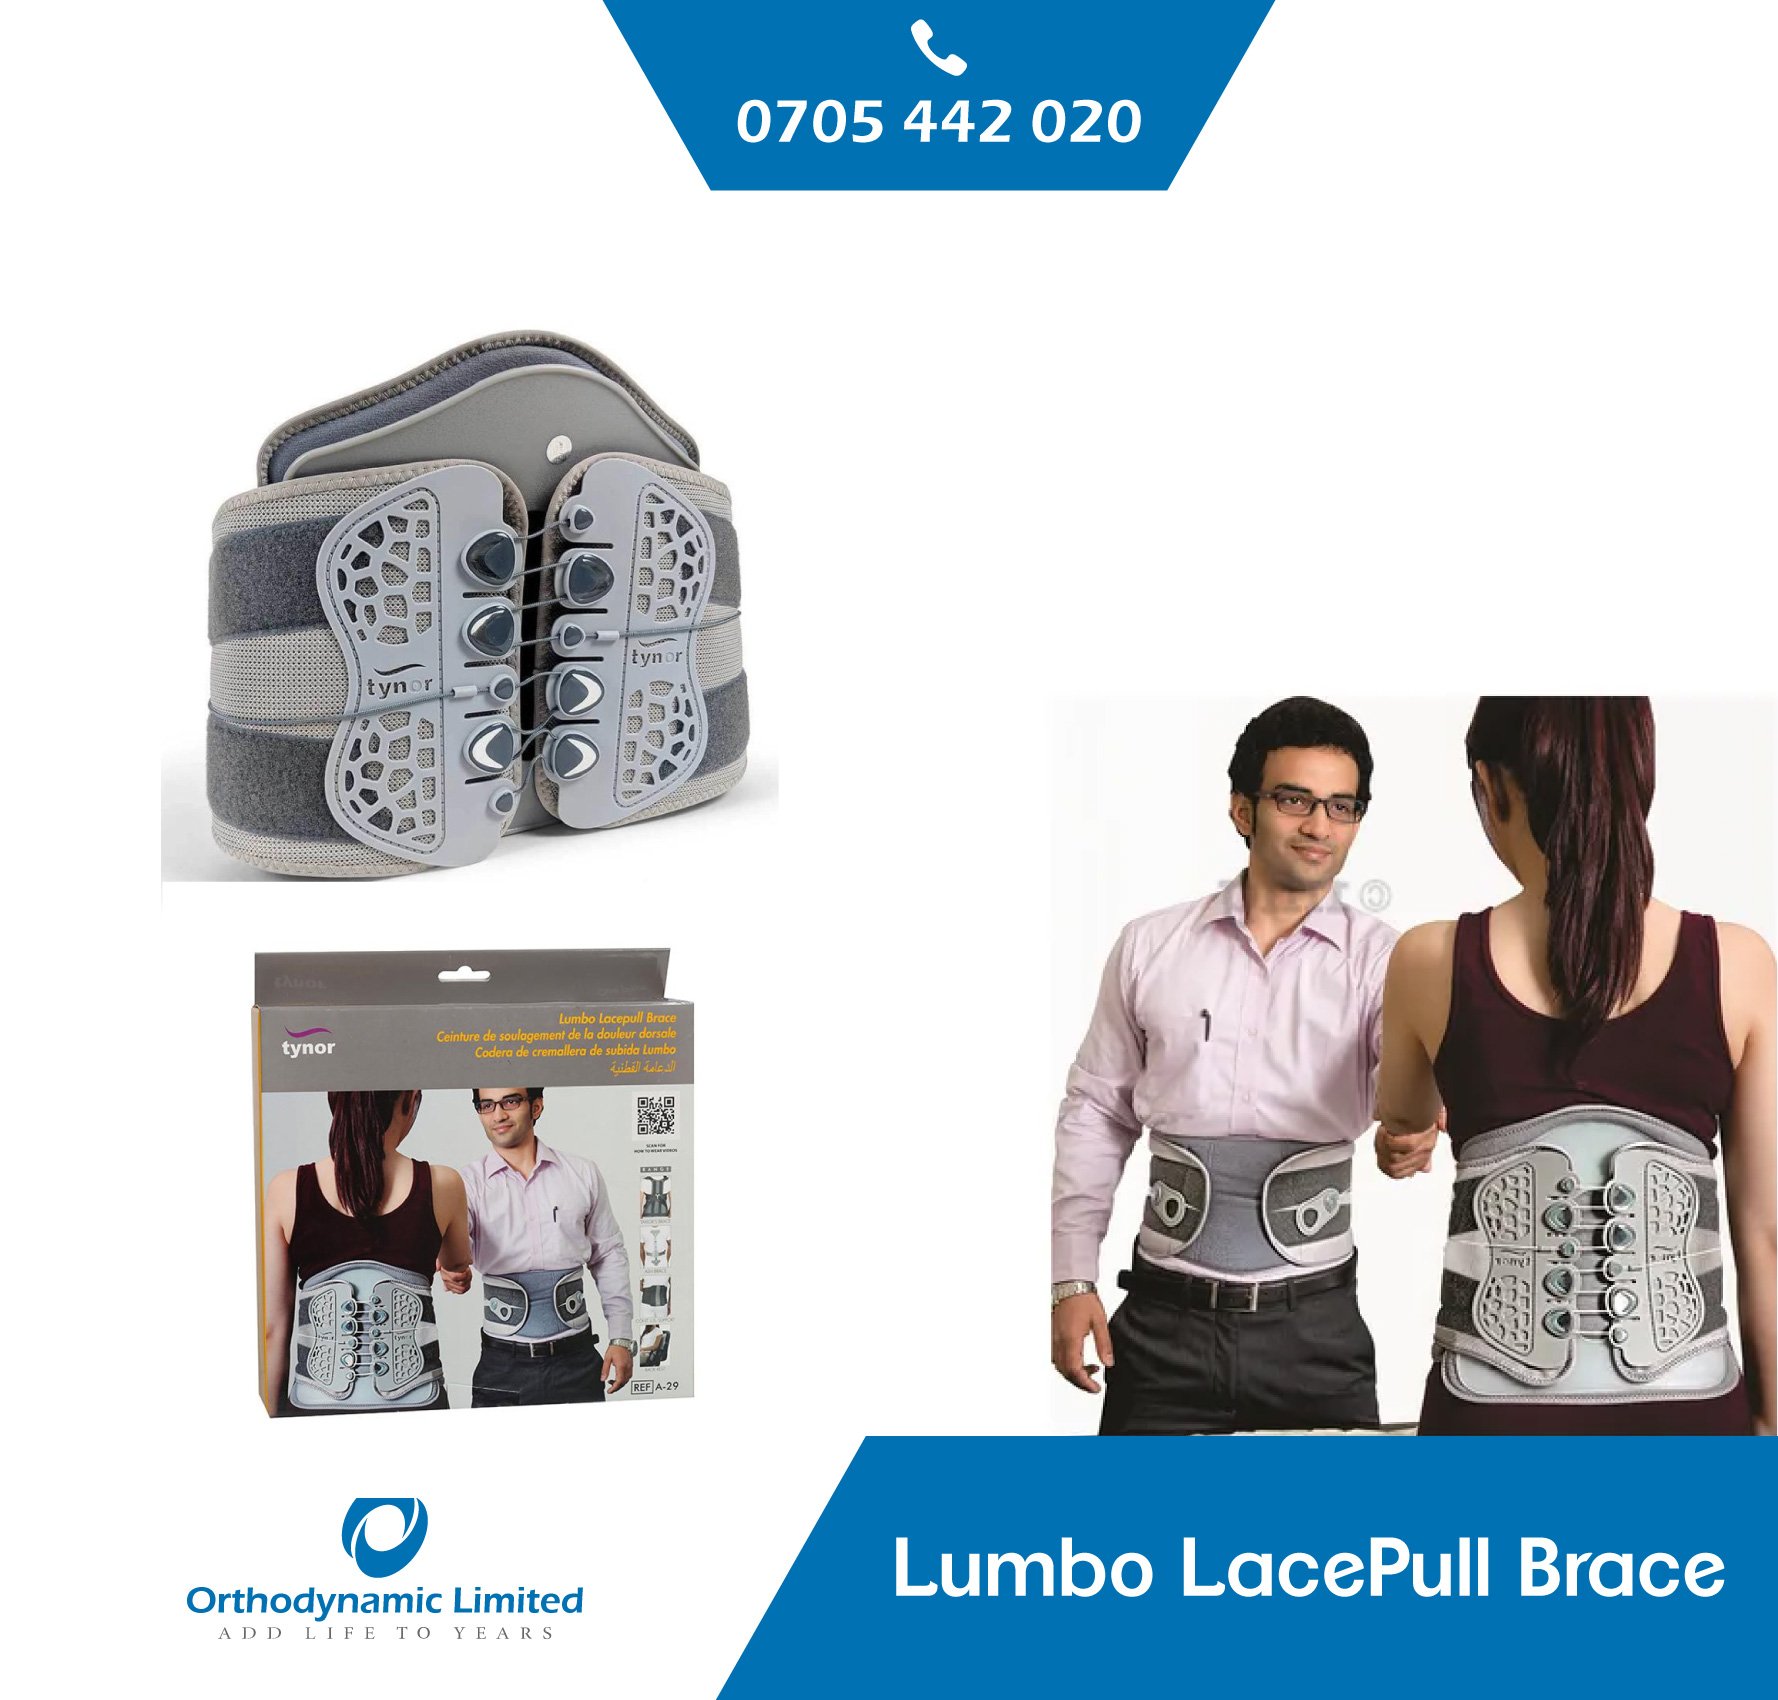 Lumbo Lacepull Brace Archives - Clinihealth